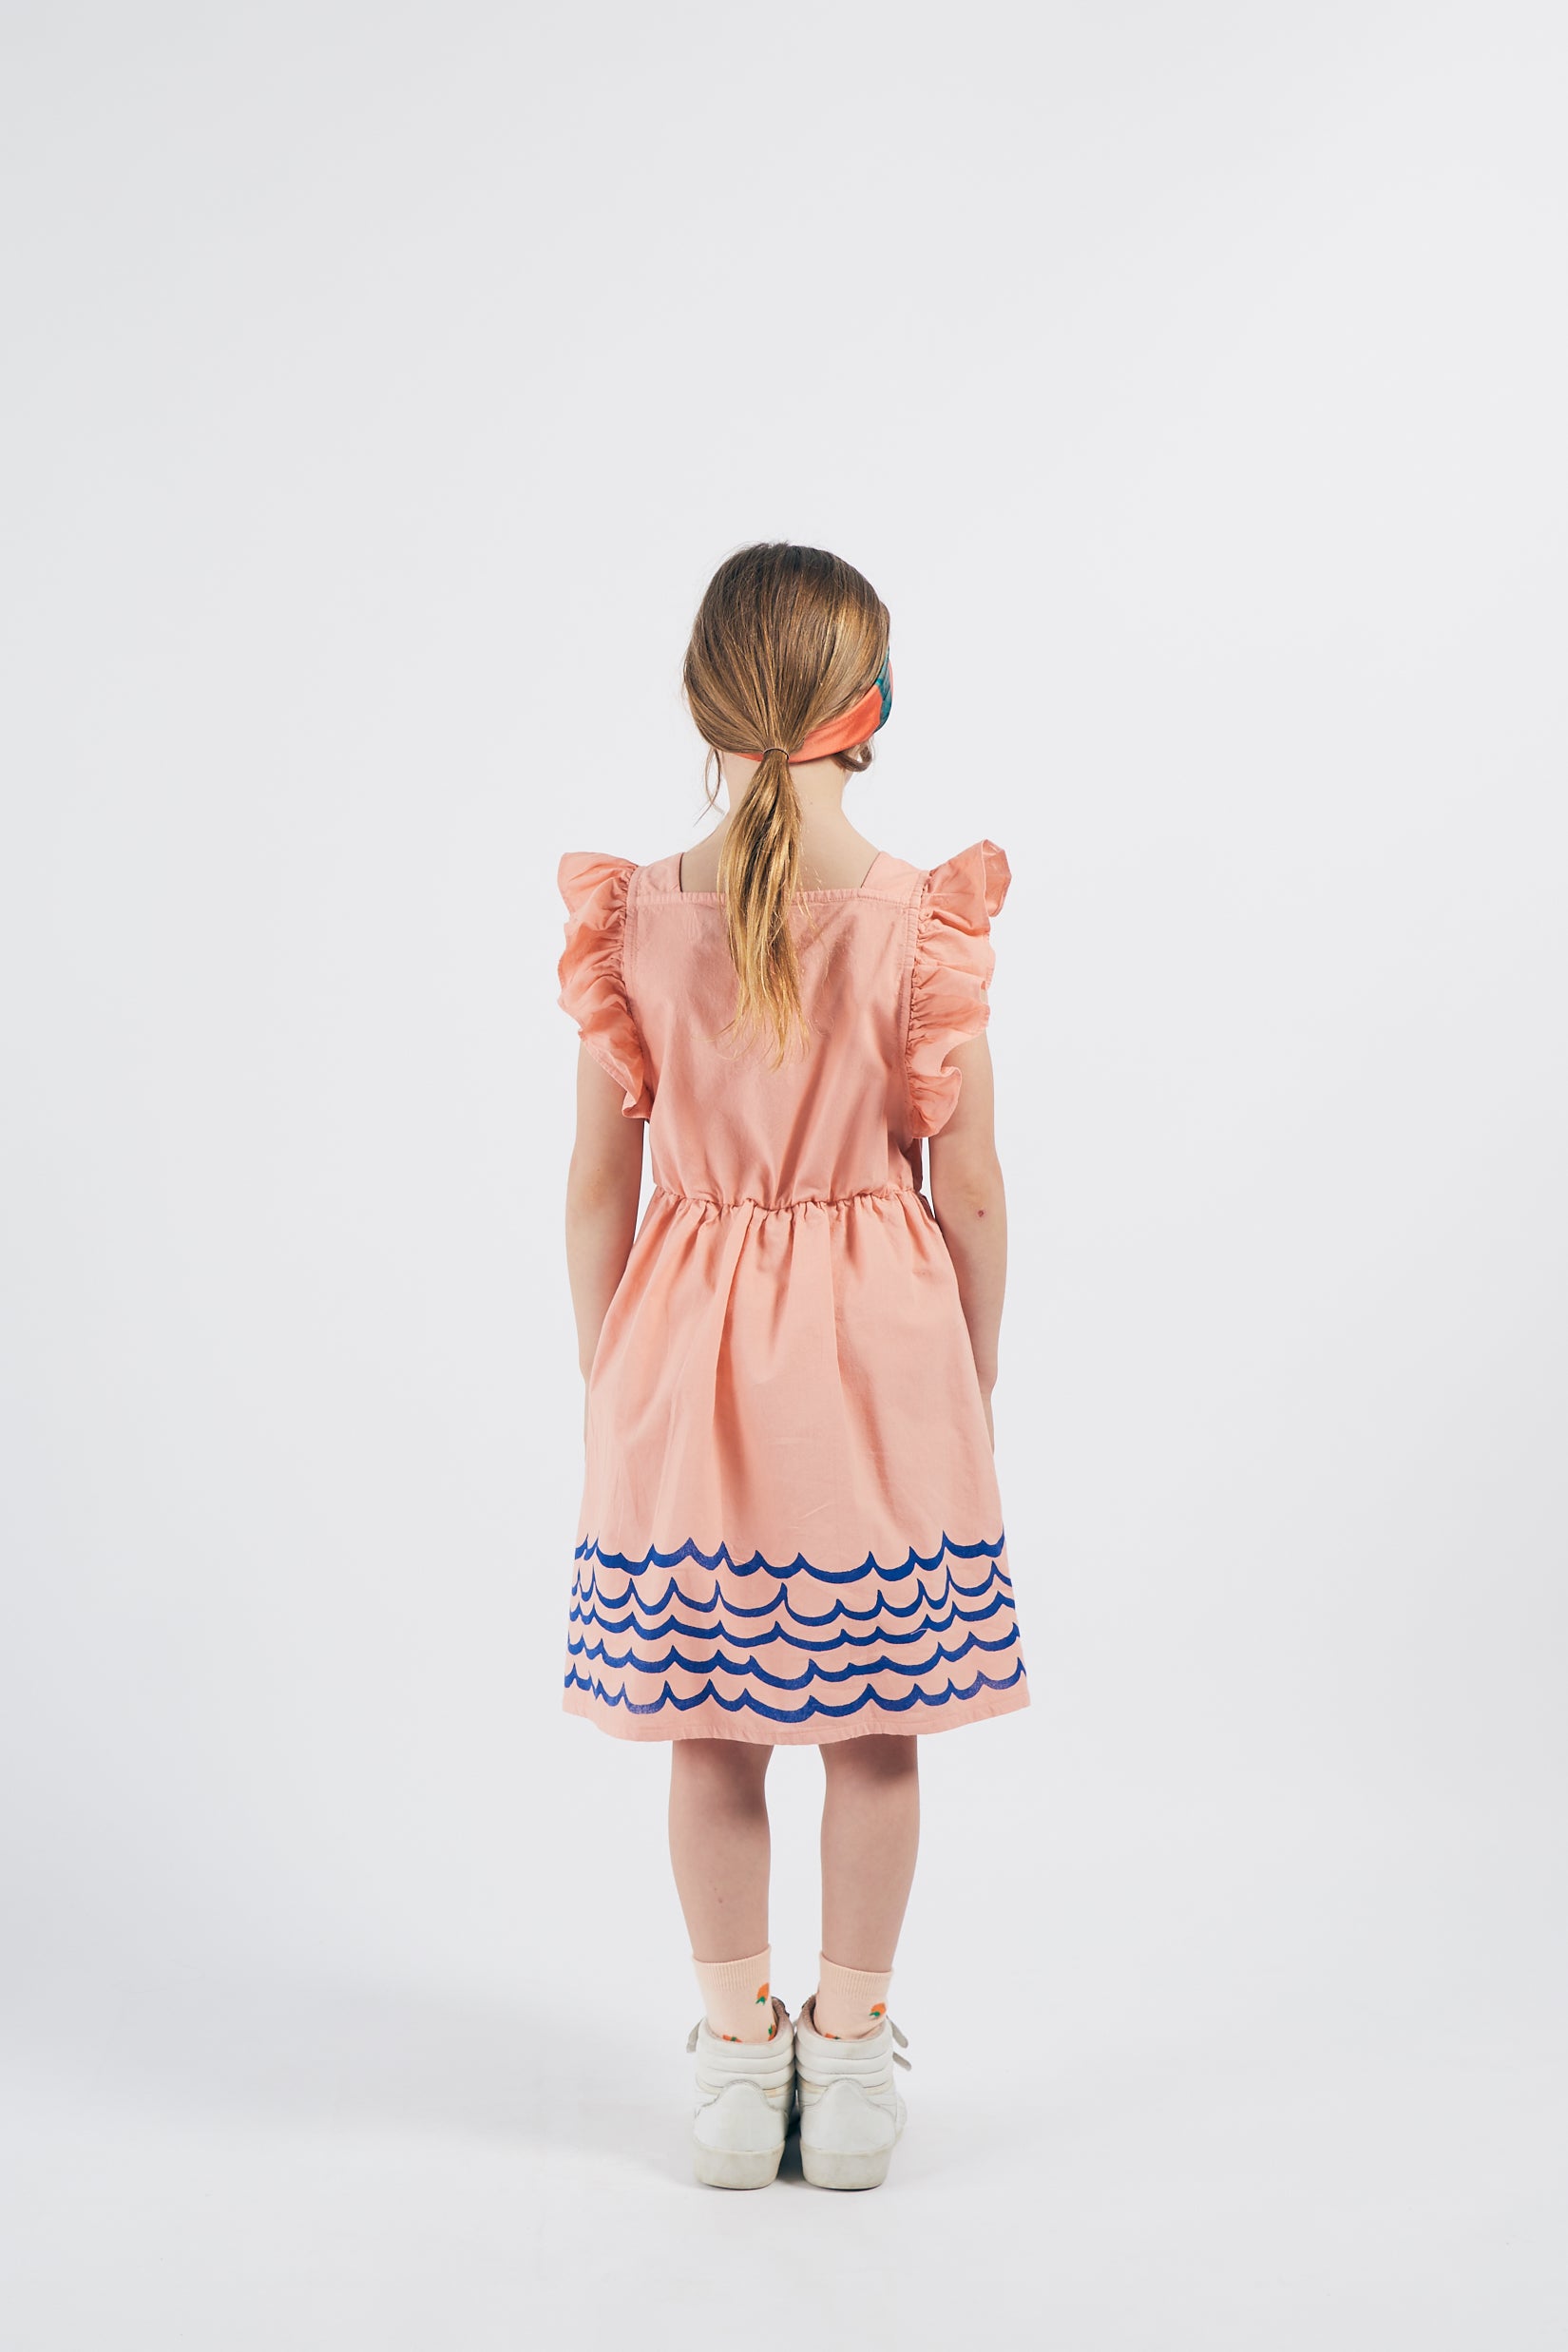 Girls Pink & Blue Ruffle Cotton Dress